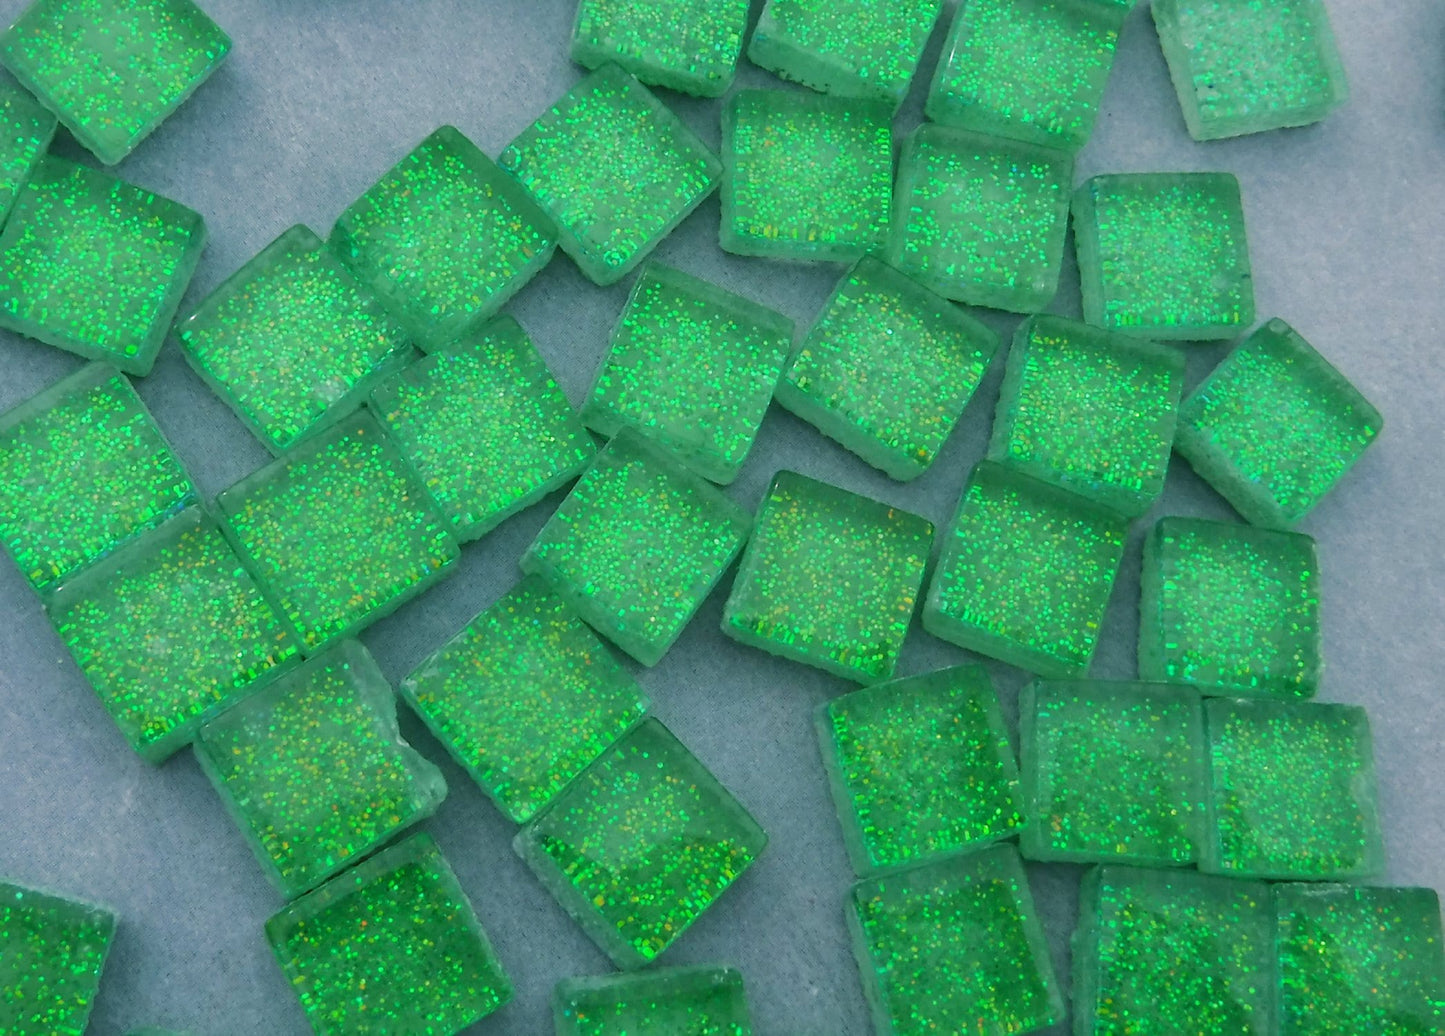 Bright Candy Green Glitter Tiles - 1 cm - 100g - Over 100 Metallic Glass Tiles